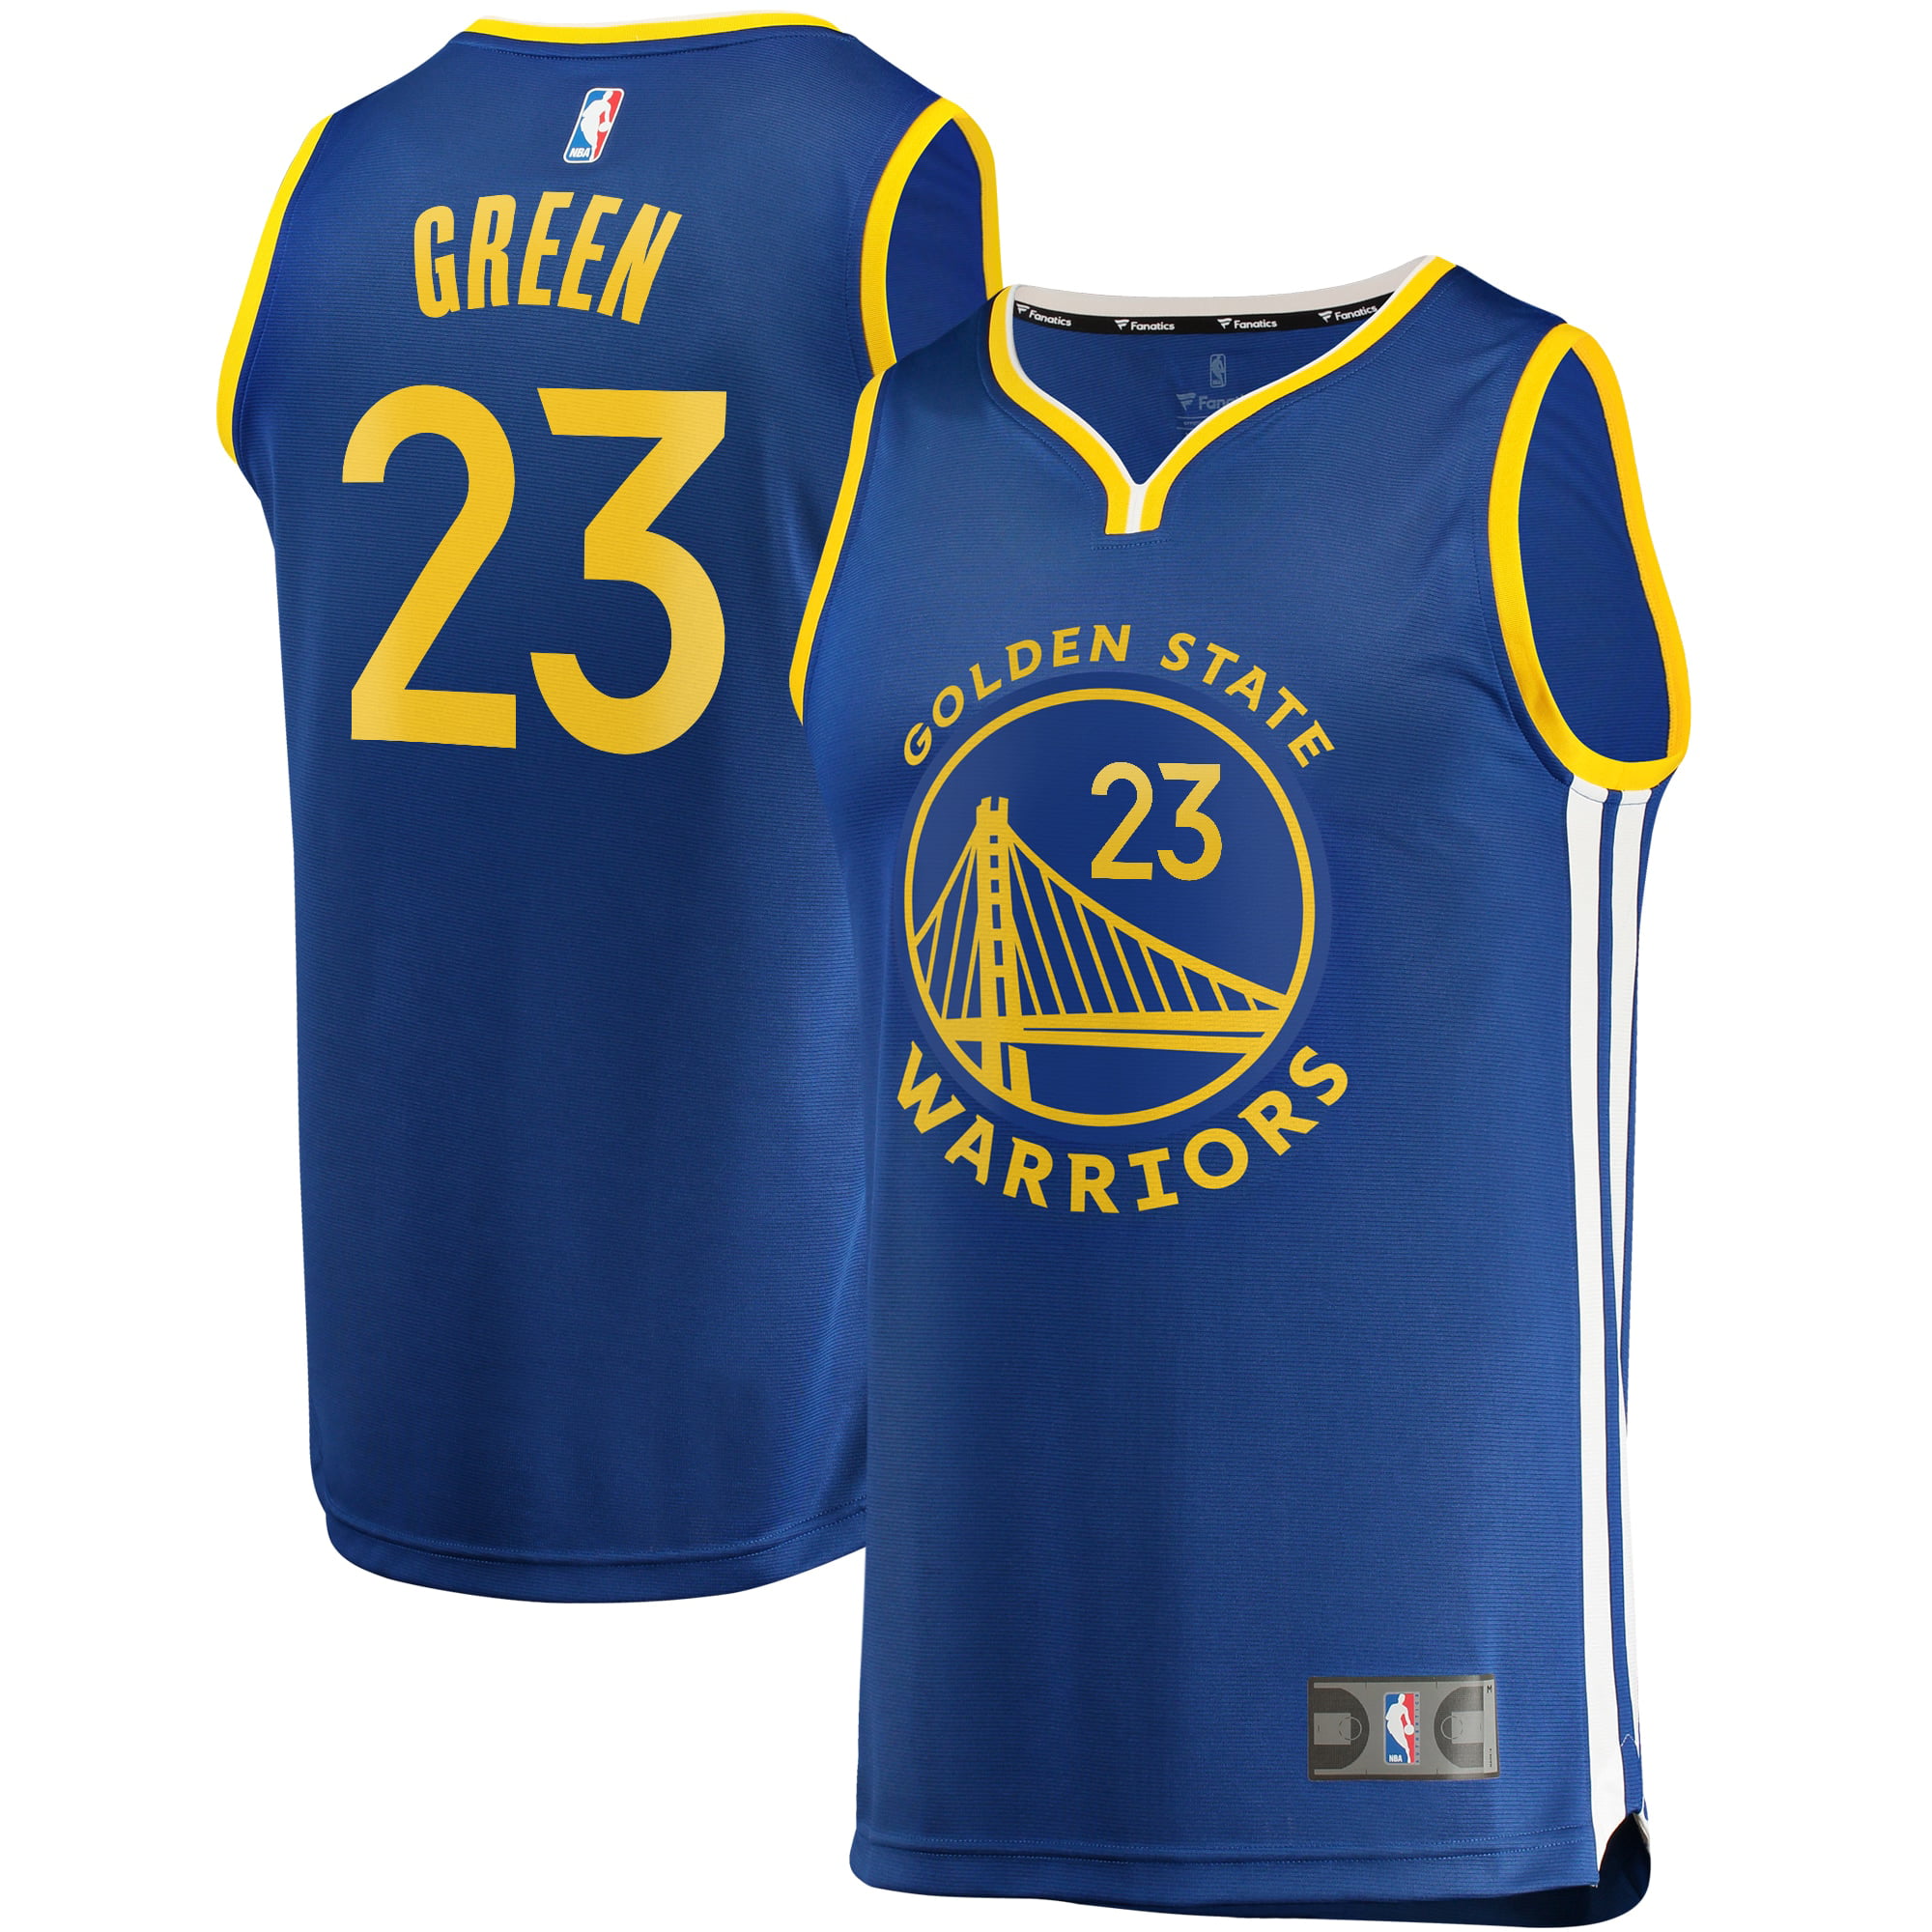 Golden State Warriors Road Uniform - National Basketball